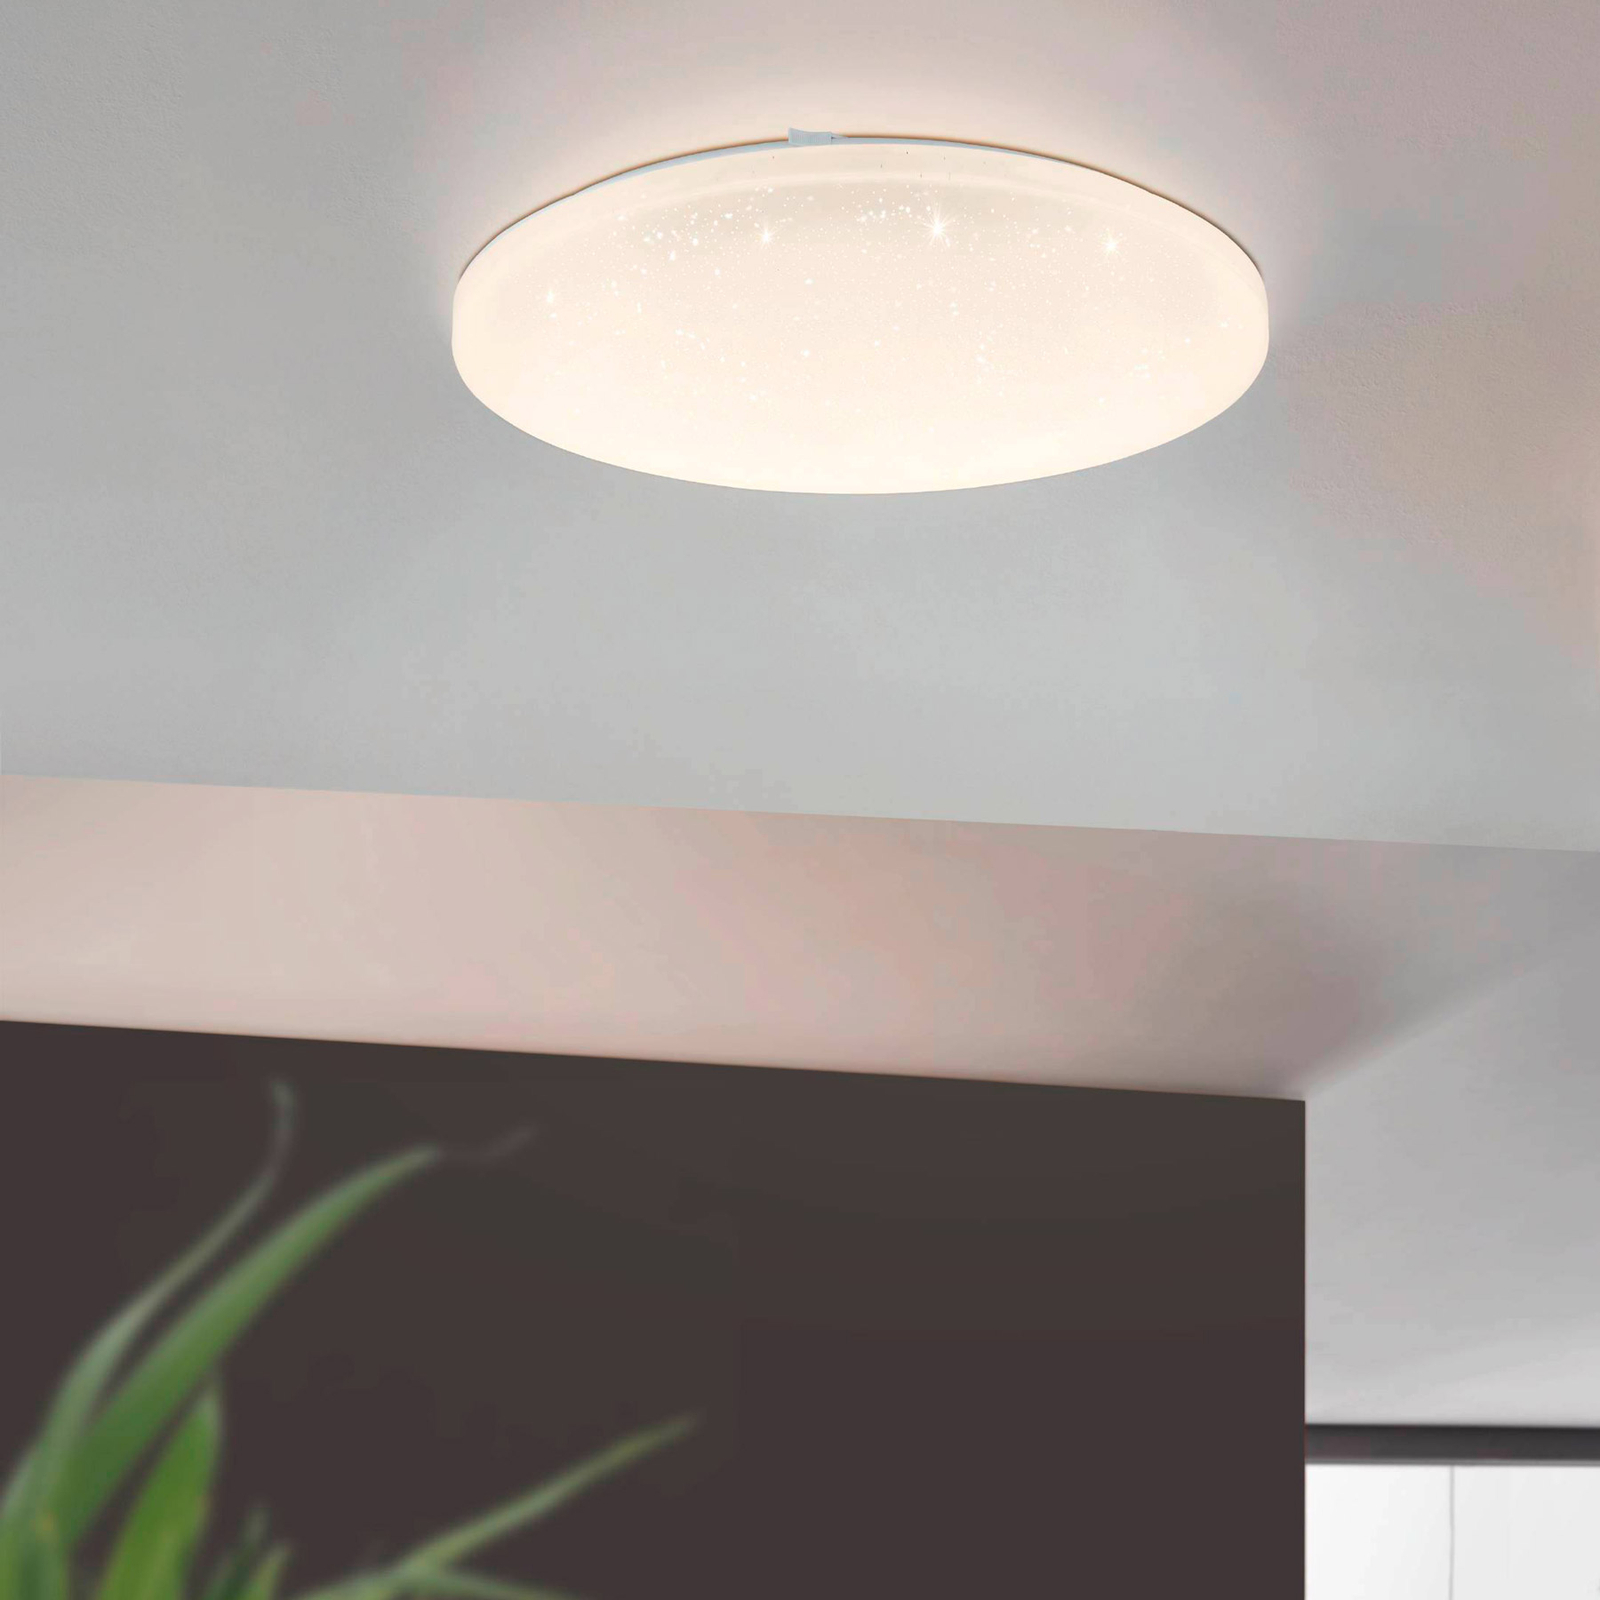 LED-Deckenlampe Frania-S m. Kristalleffekt Ø 43cm